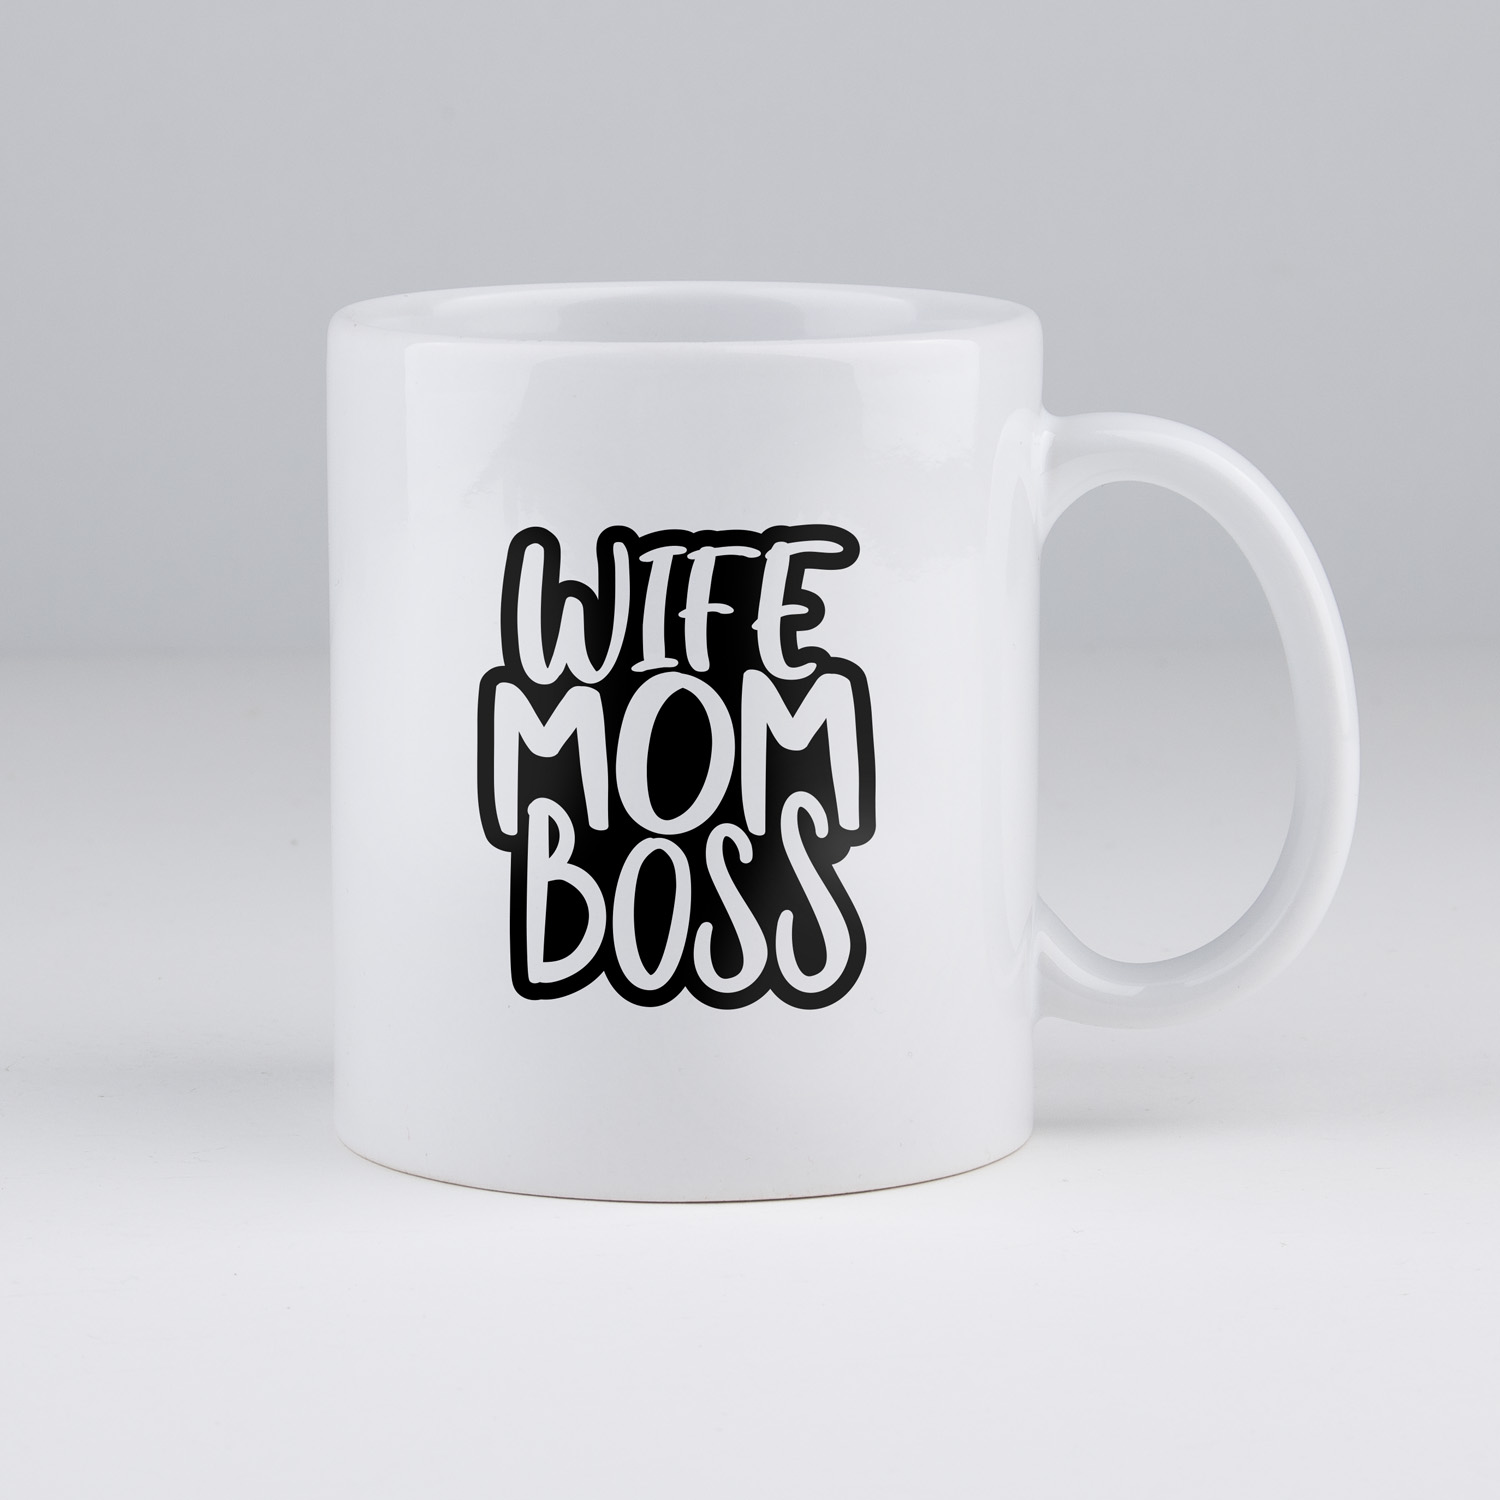 koffietas, koffiemok, mama, moeder, mom, wife mom boss